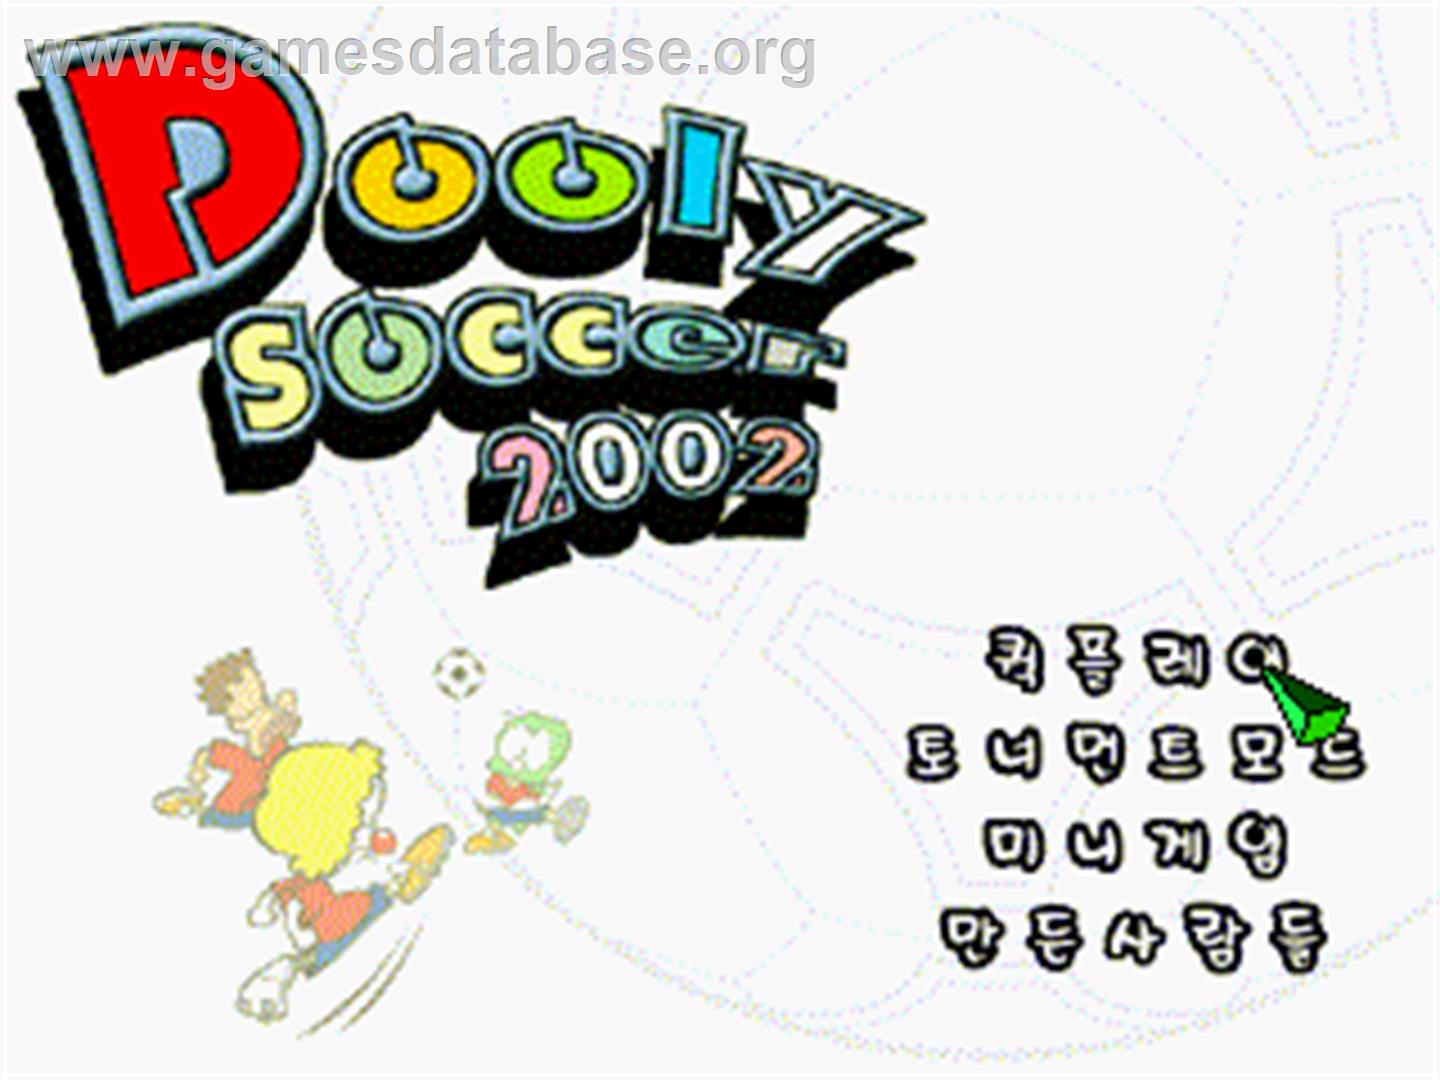 Dooly Soccer 2002 - Gamepark GP32 - Artwork - Title Screen